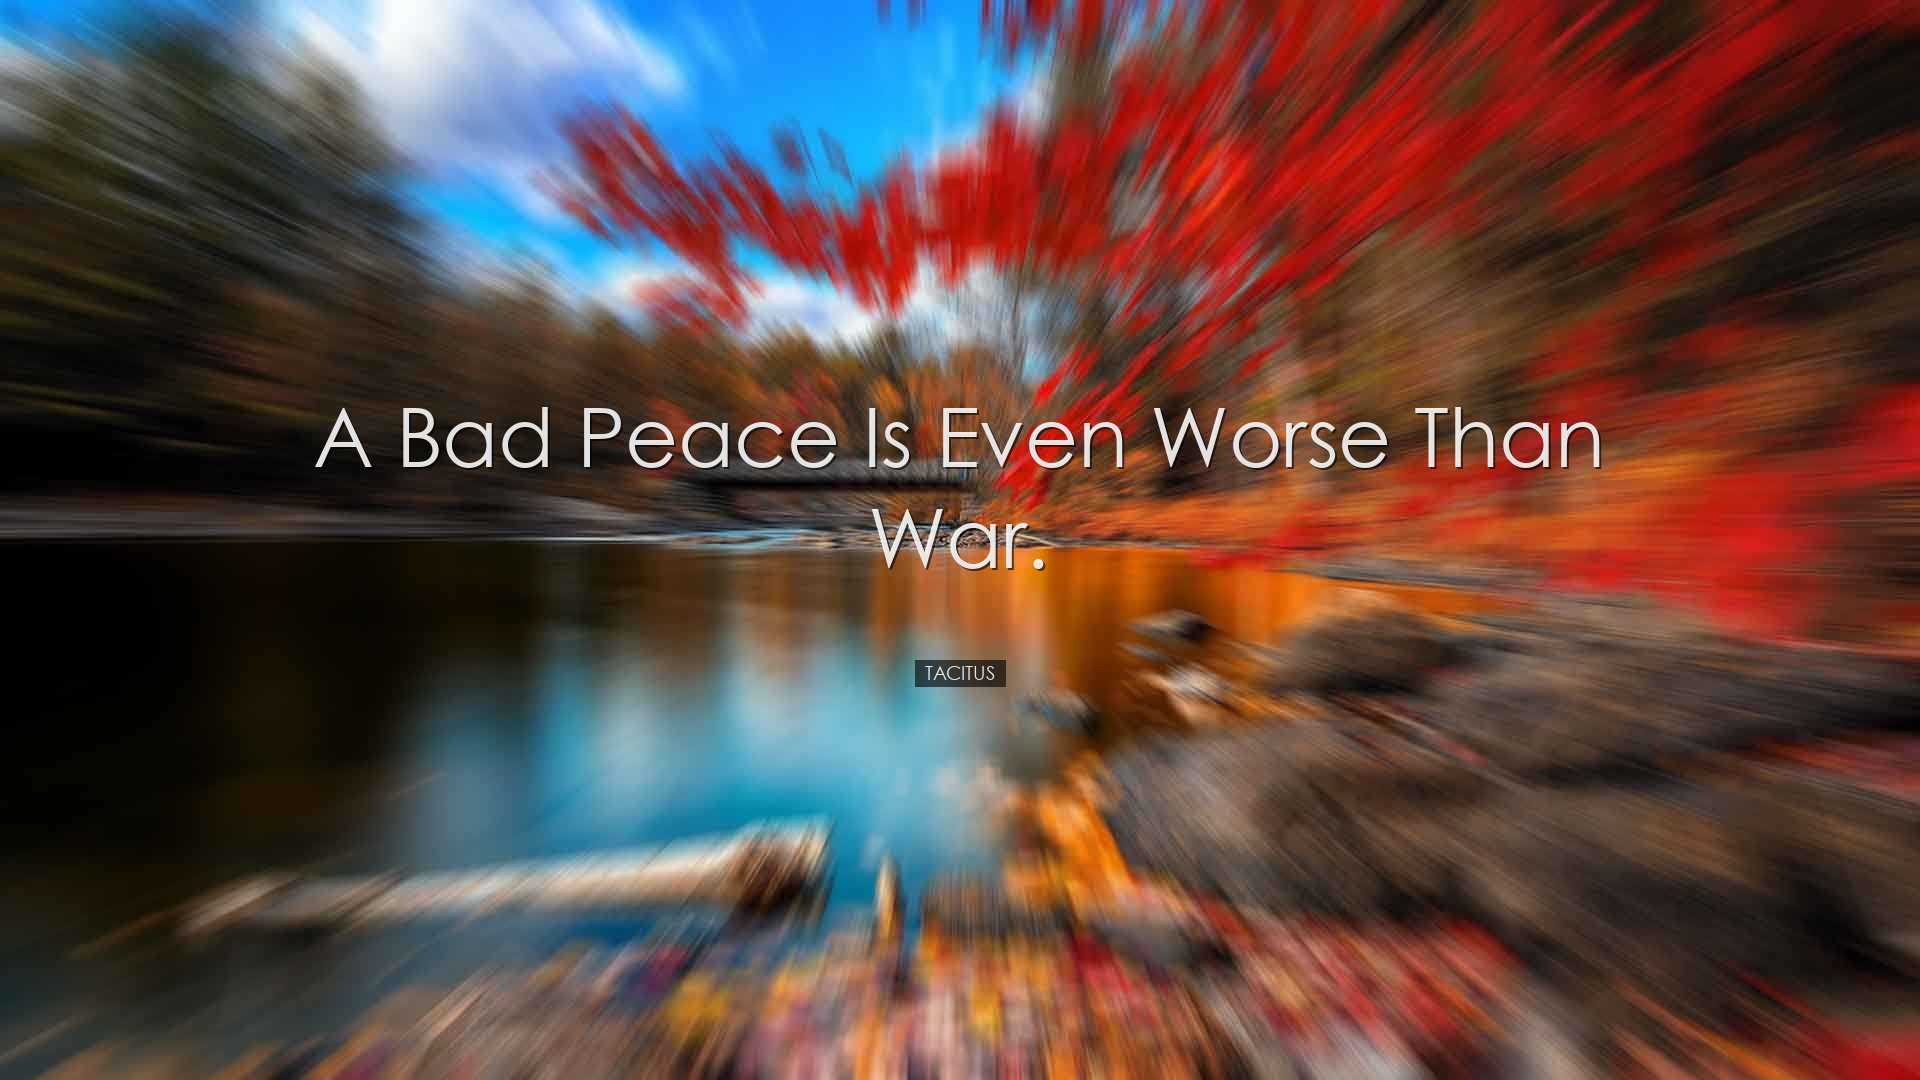 A bad peace is even worse than war. - Tacitus